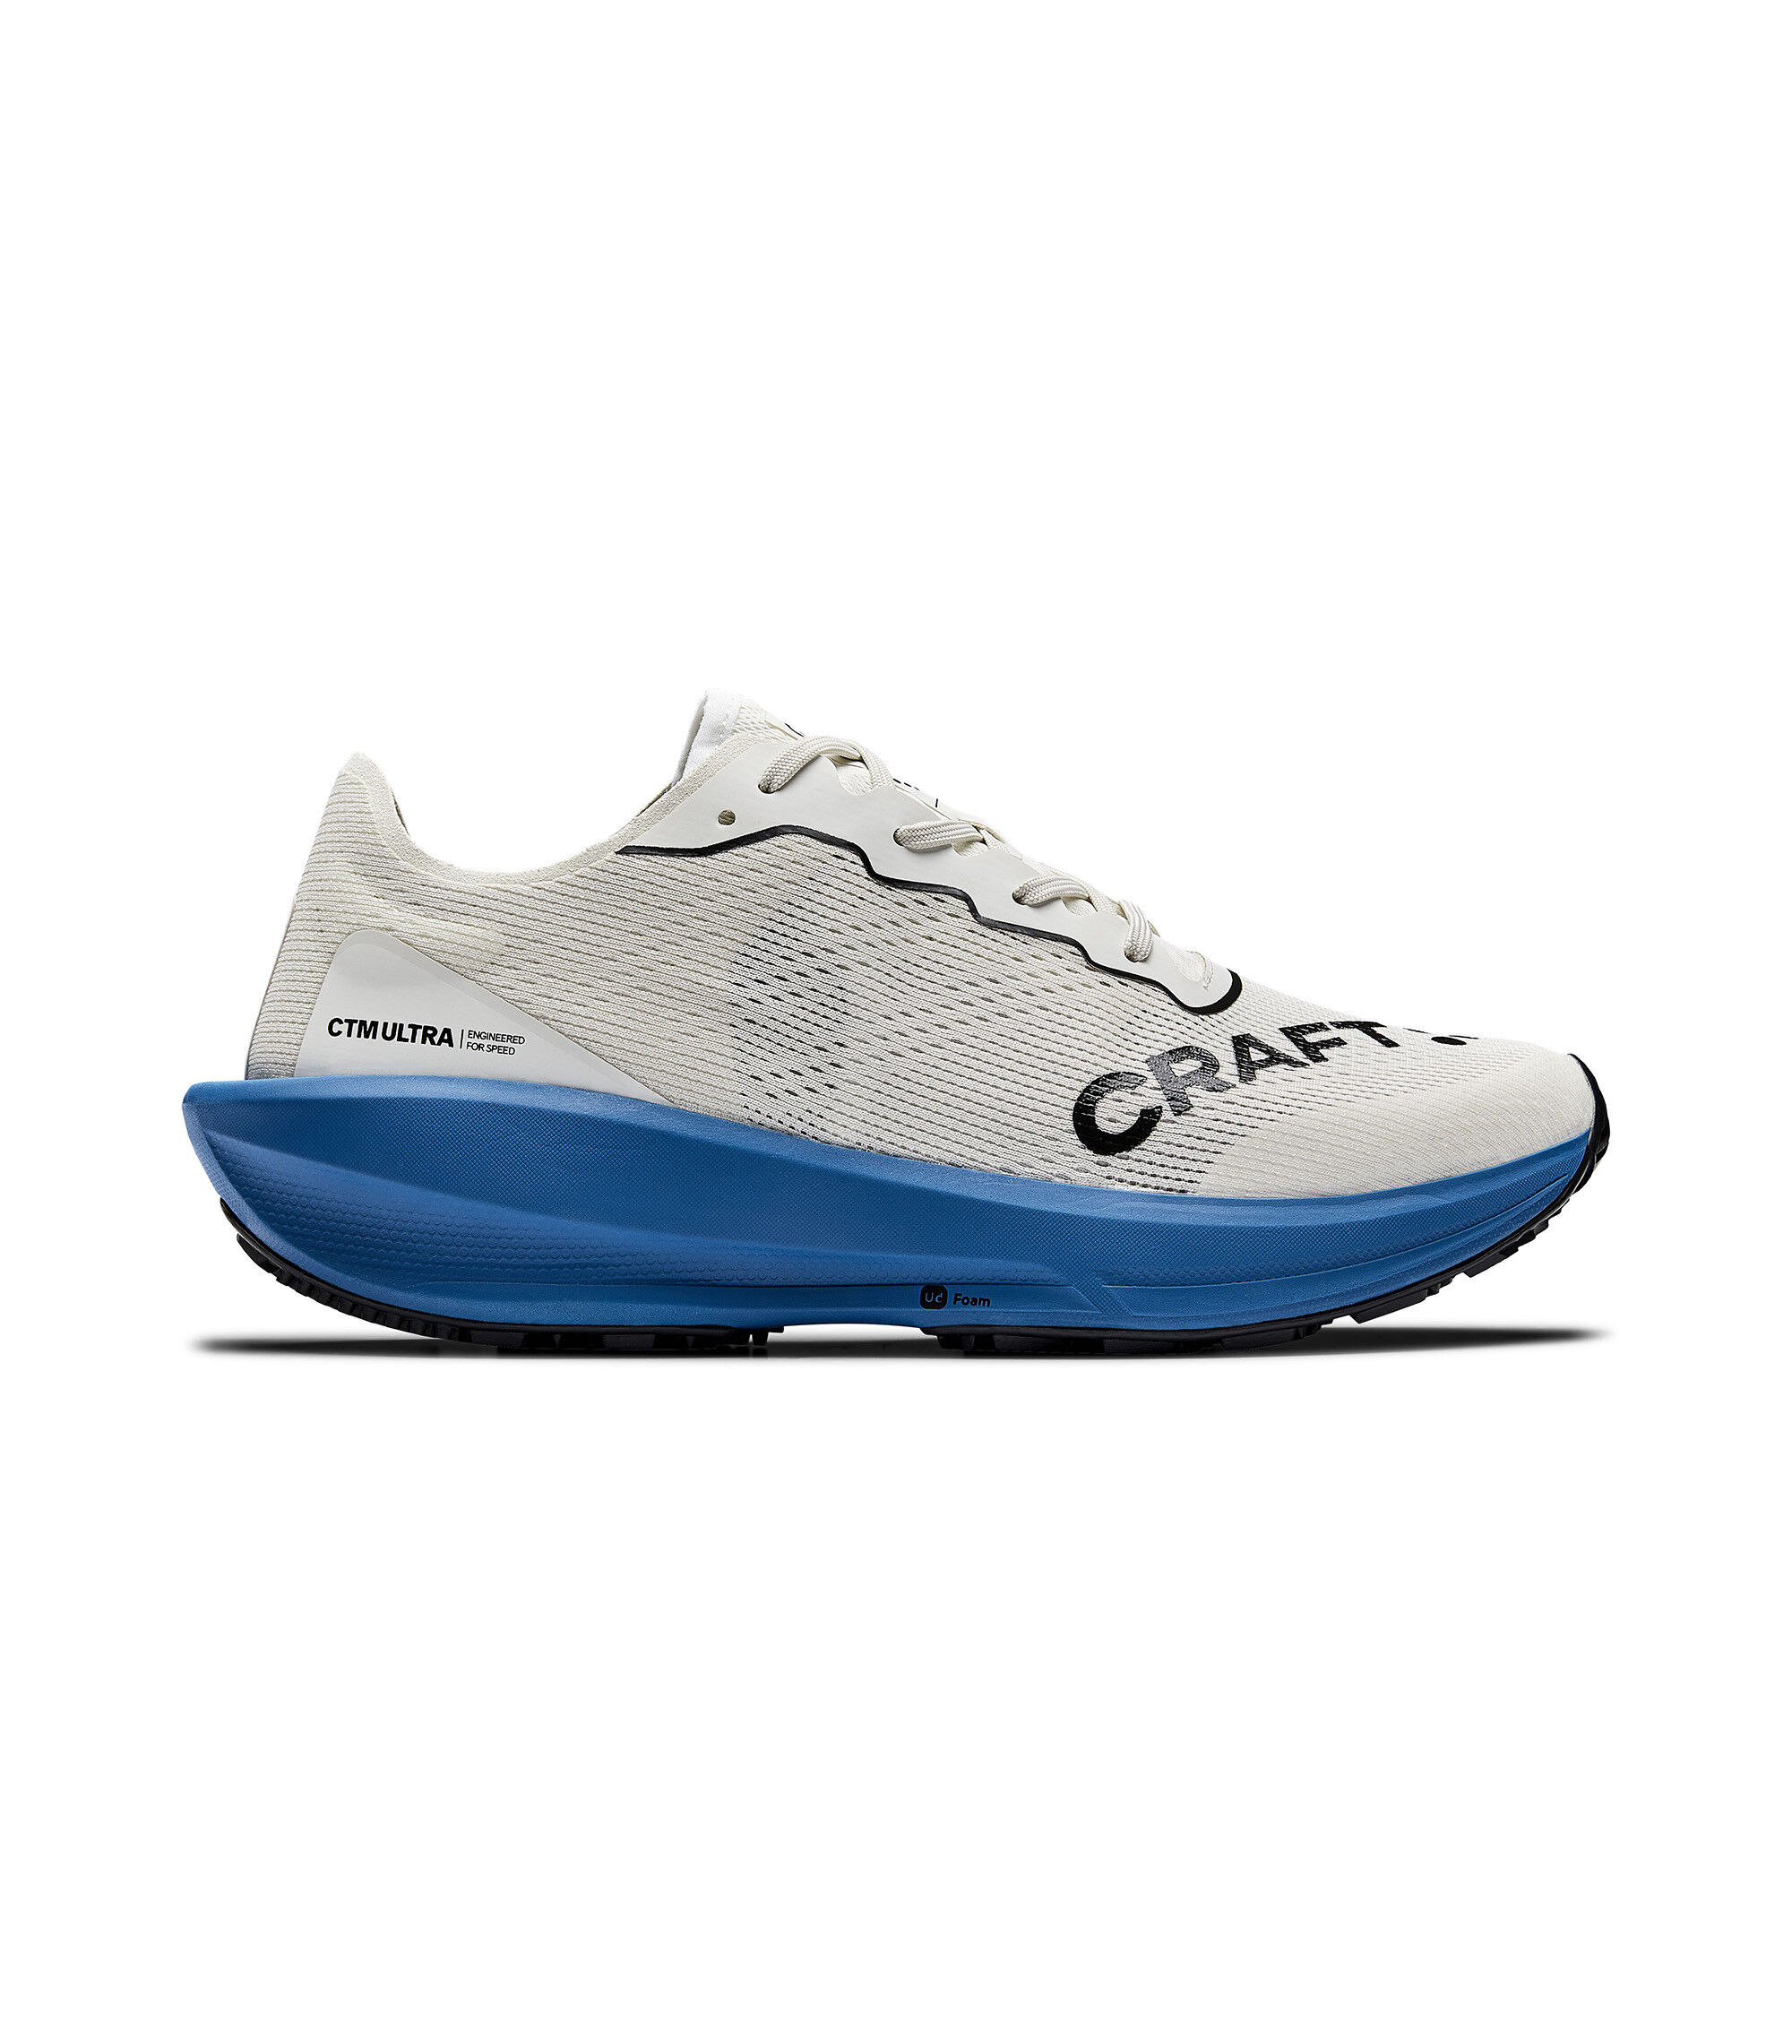 Craft CTM Ultra 2 - Running shoes - Men's